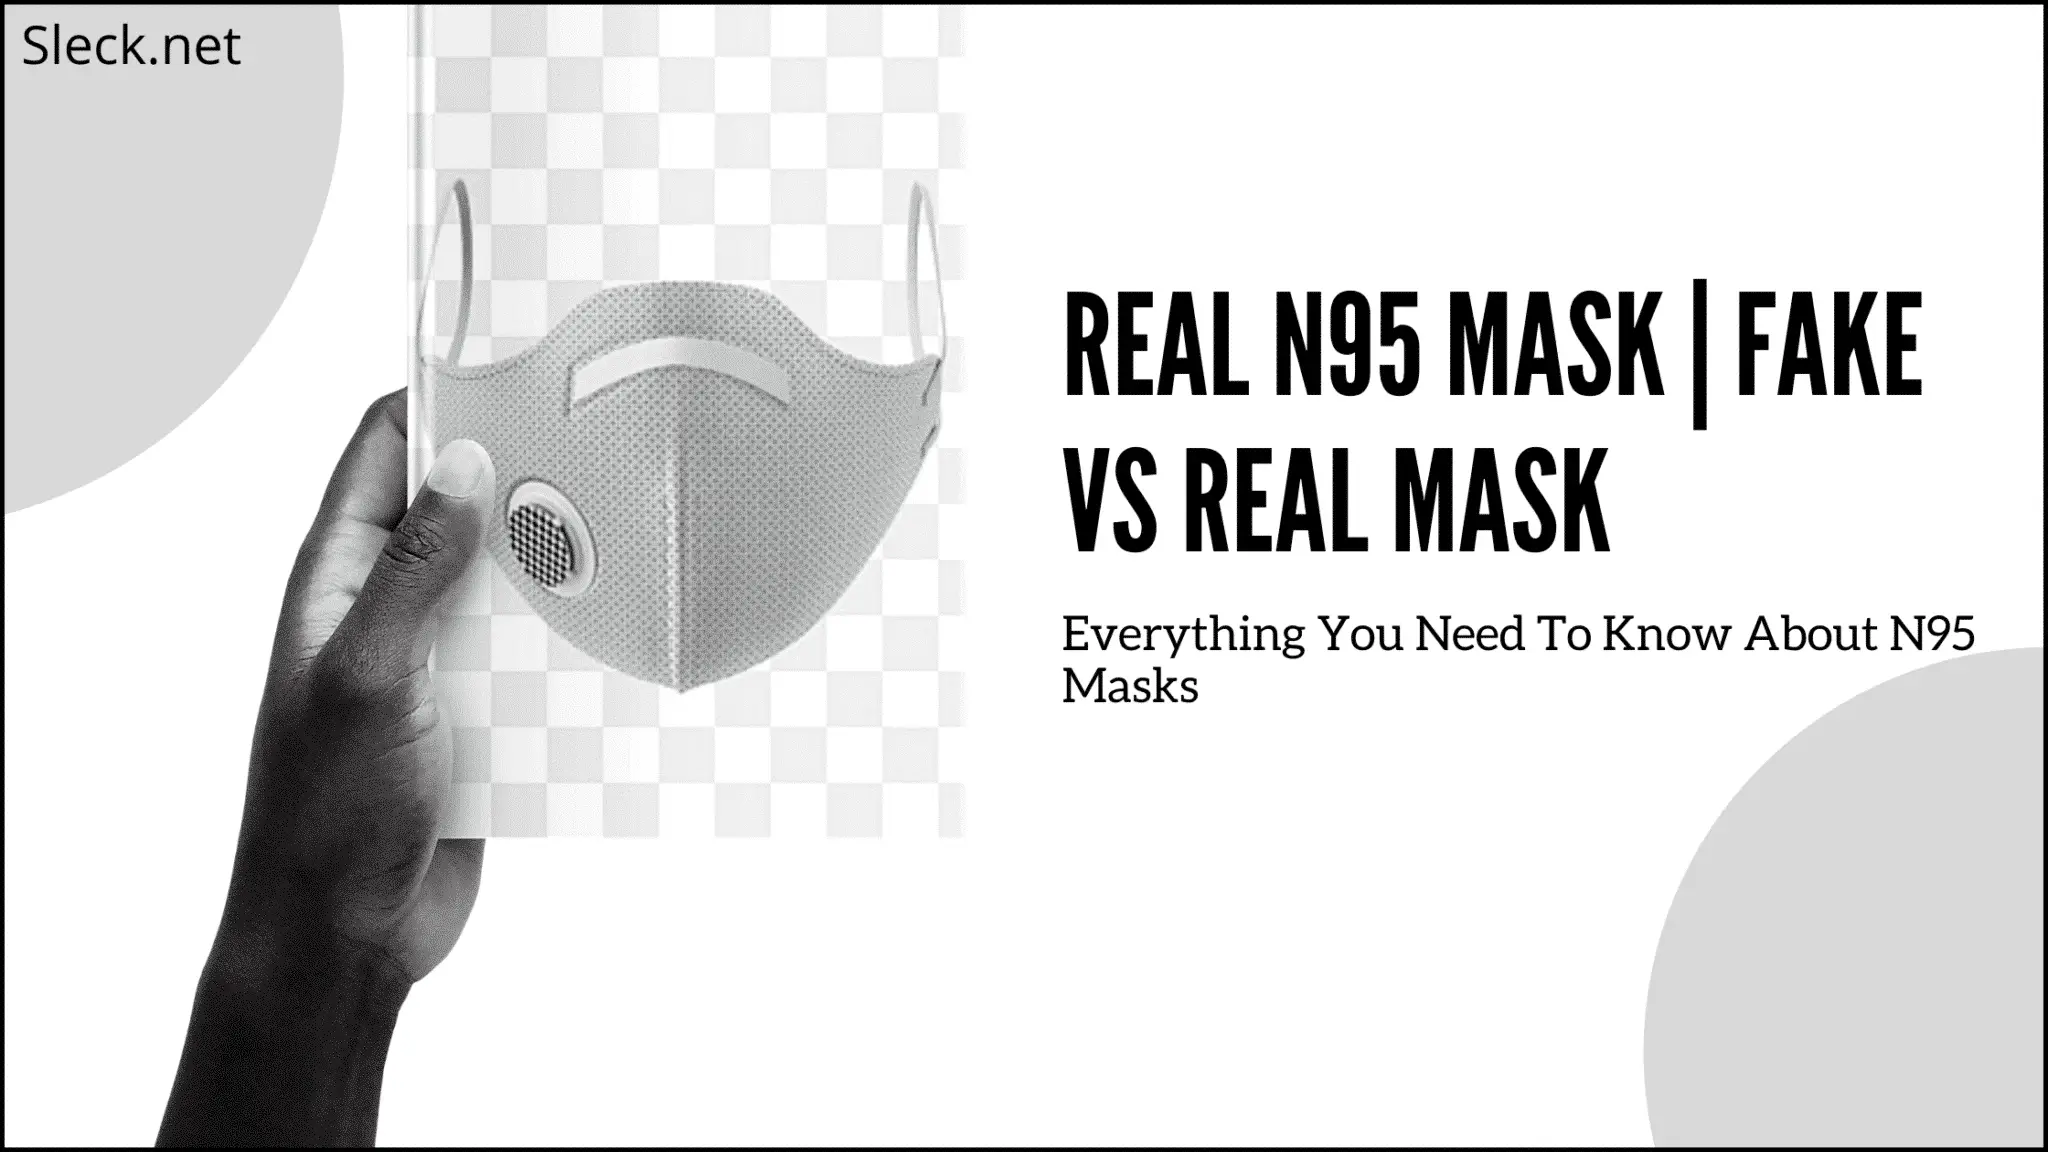 Real N95 mask